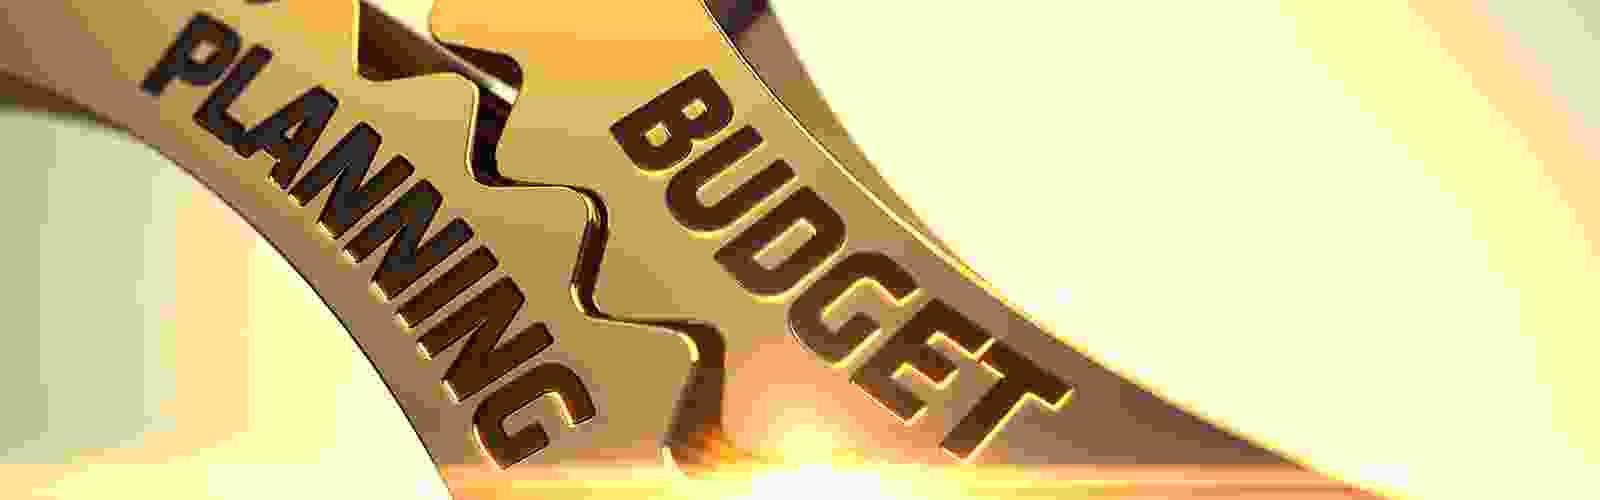 Budget & Planning Gears